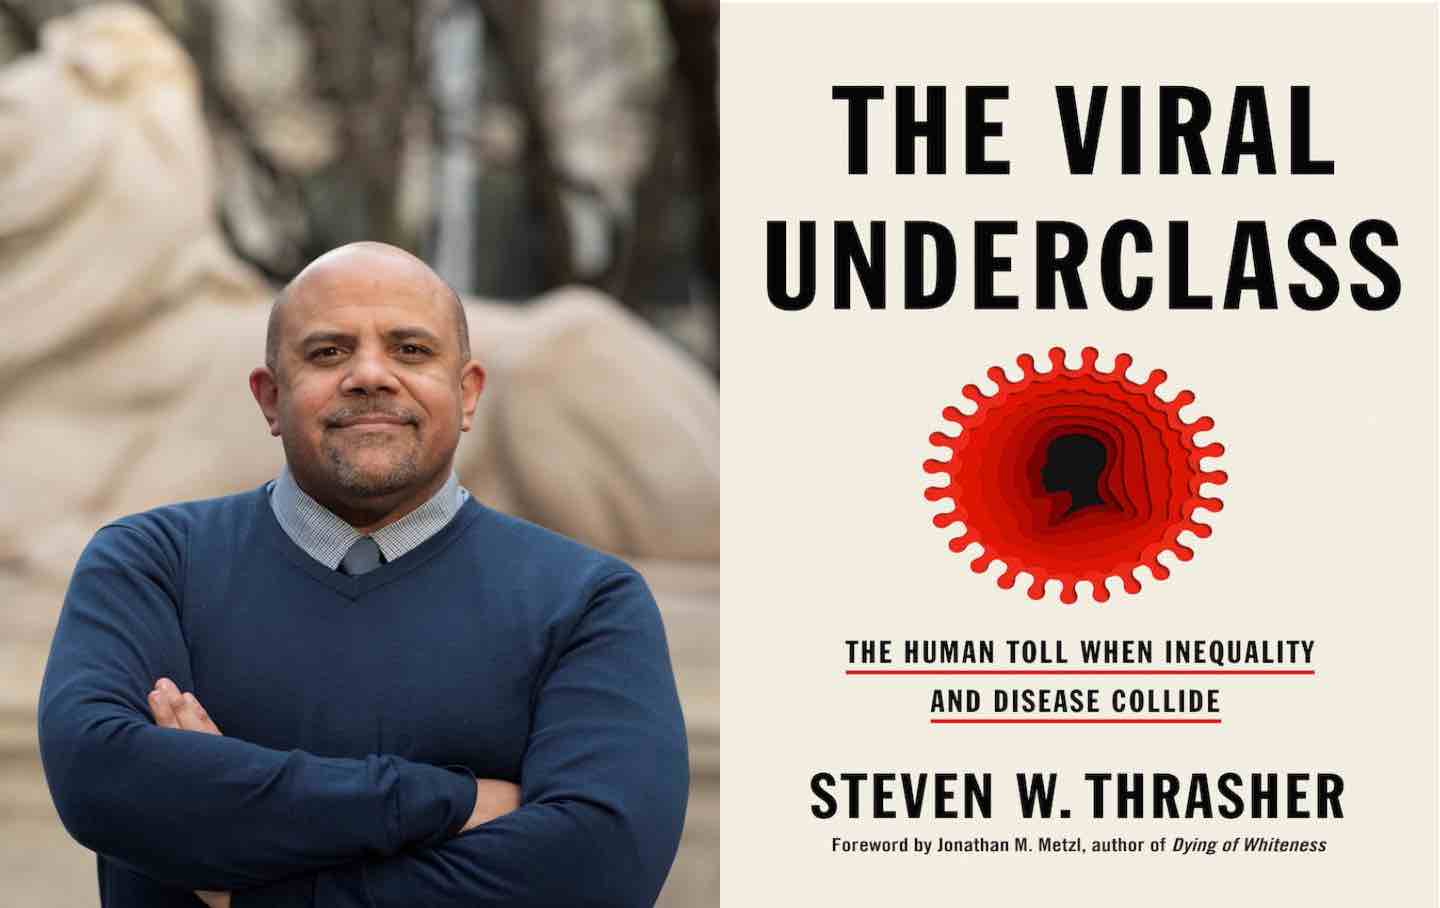 Steven Thrasher on “The Viral Underclass”